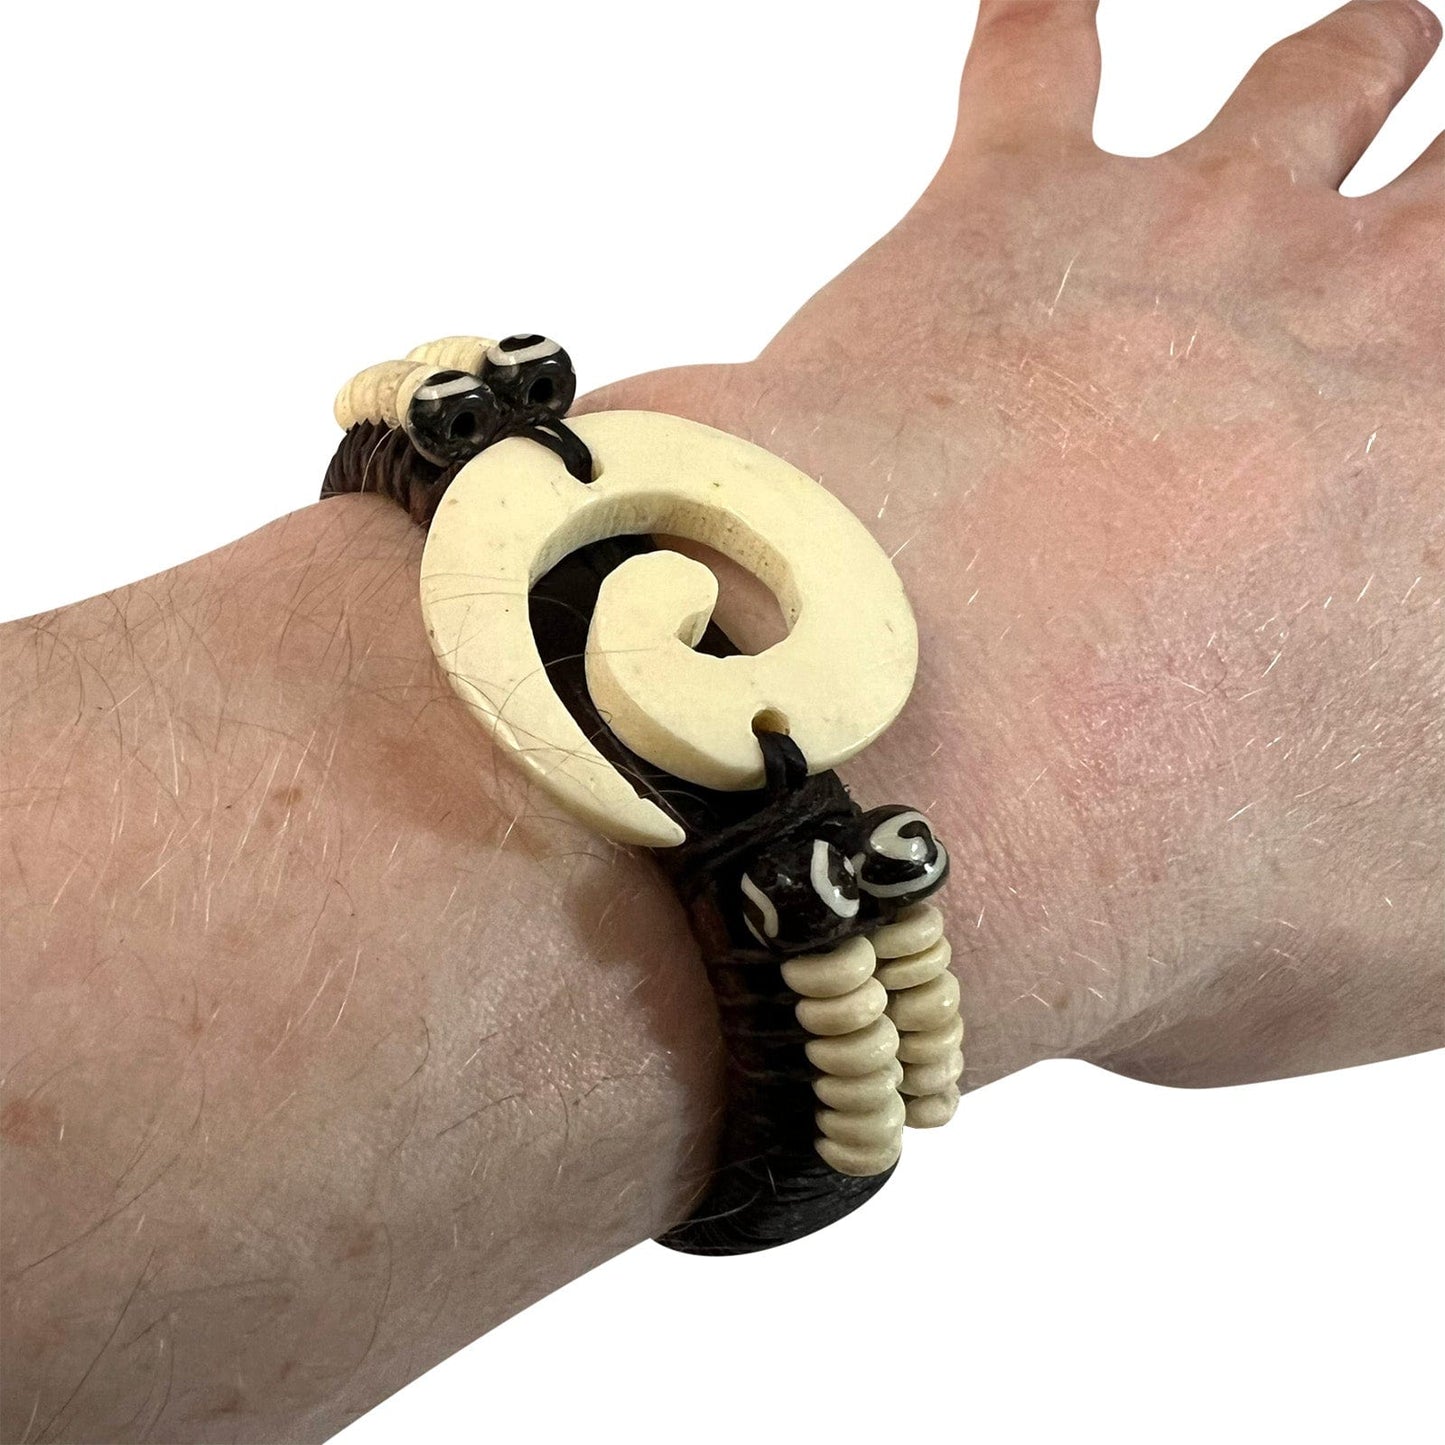 Brown Leather Spiral Bead Bracelet Wristband Bangle Mens Womens Boys Jewellery